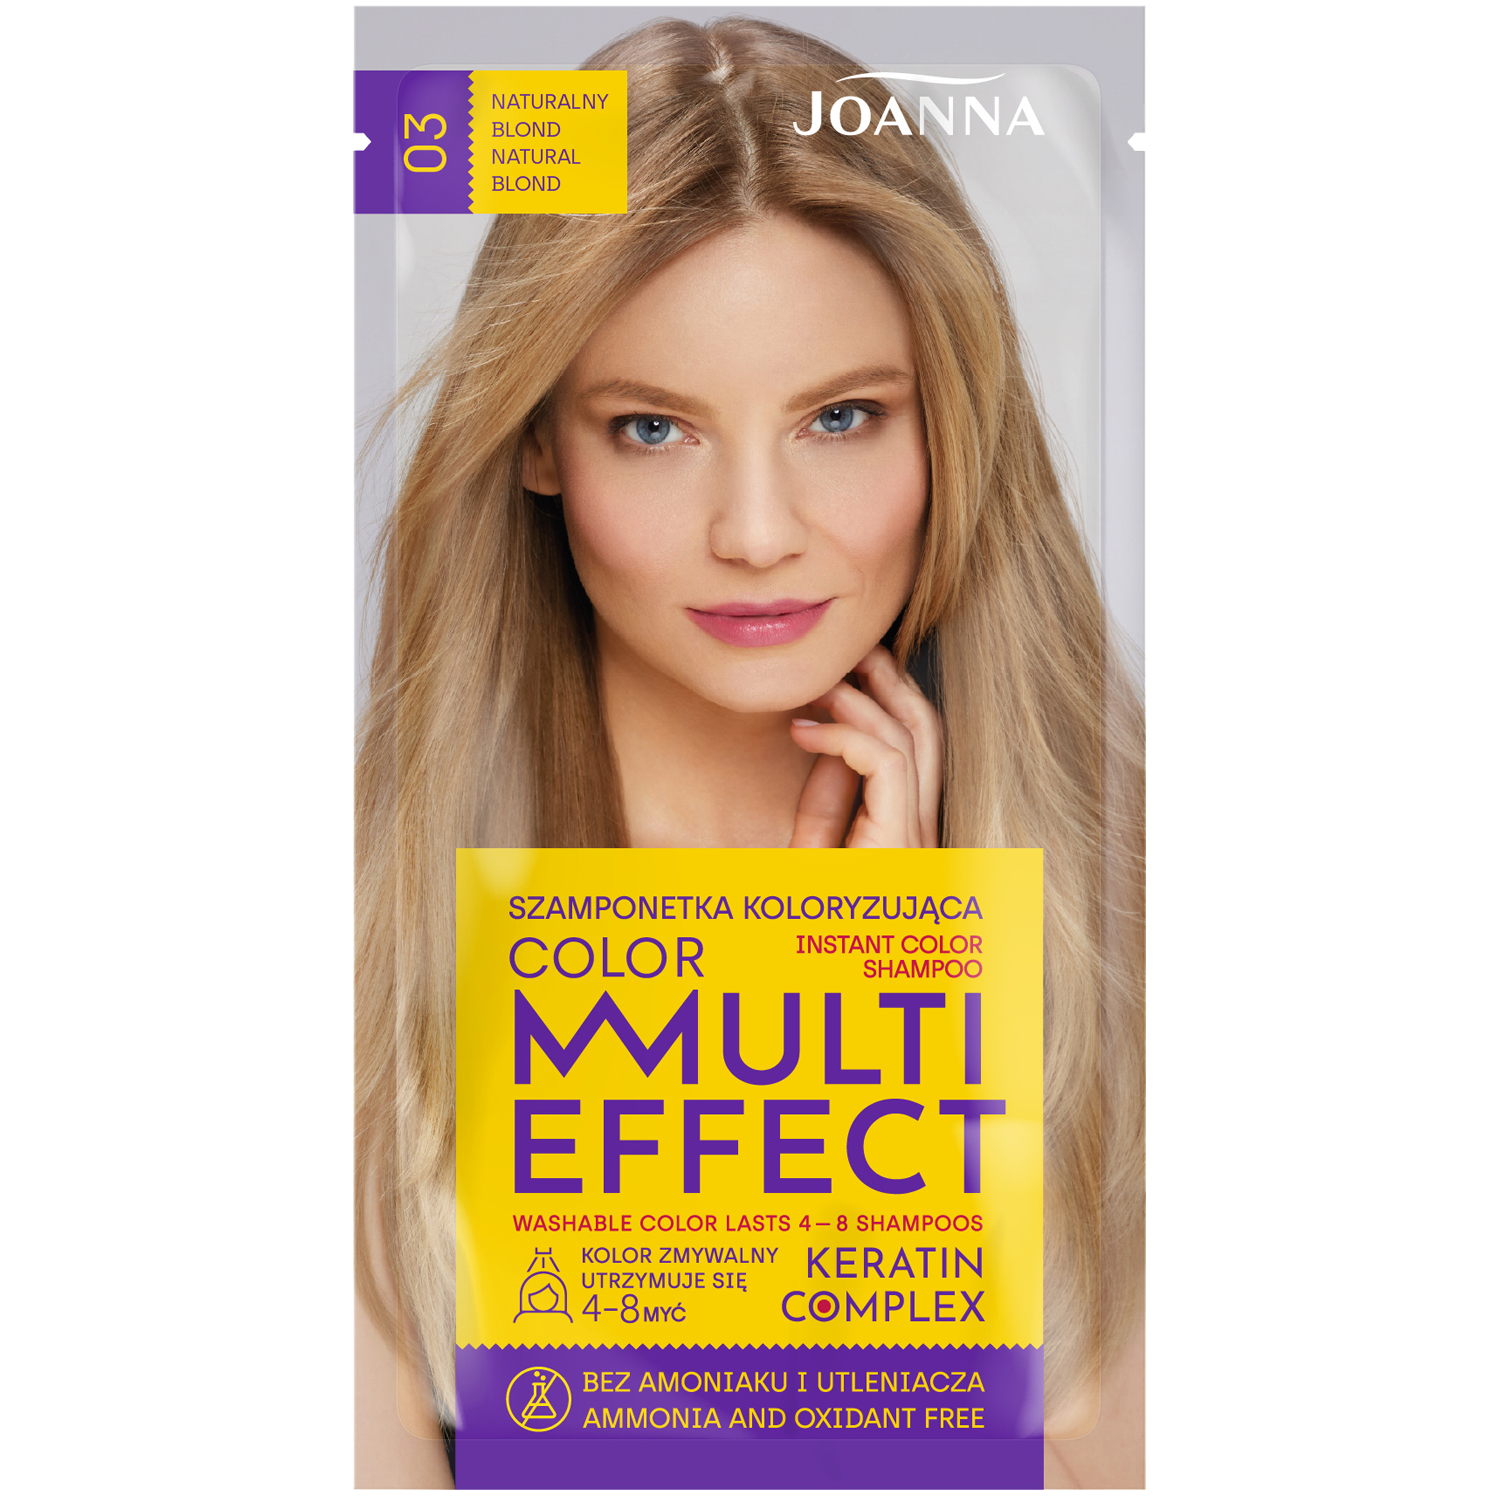 Joanna Multi Effect szamponetka koloryzująca 03 naturalny blond, 40 ml |  hebe.pl